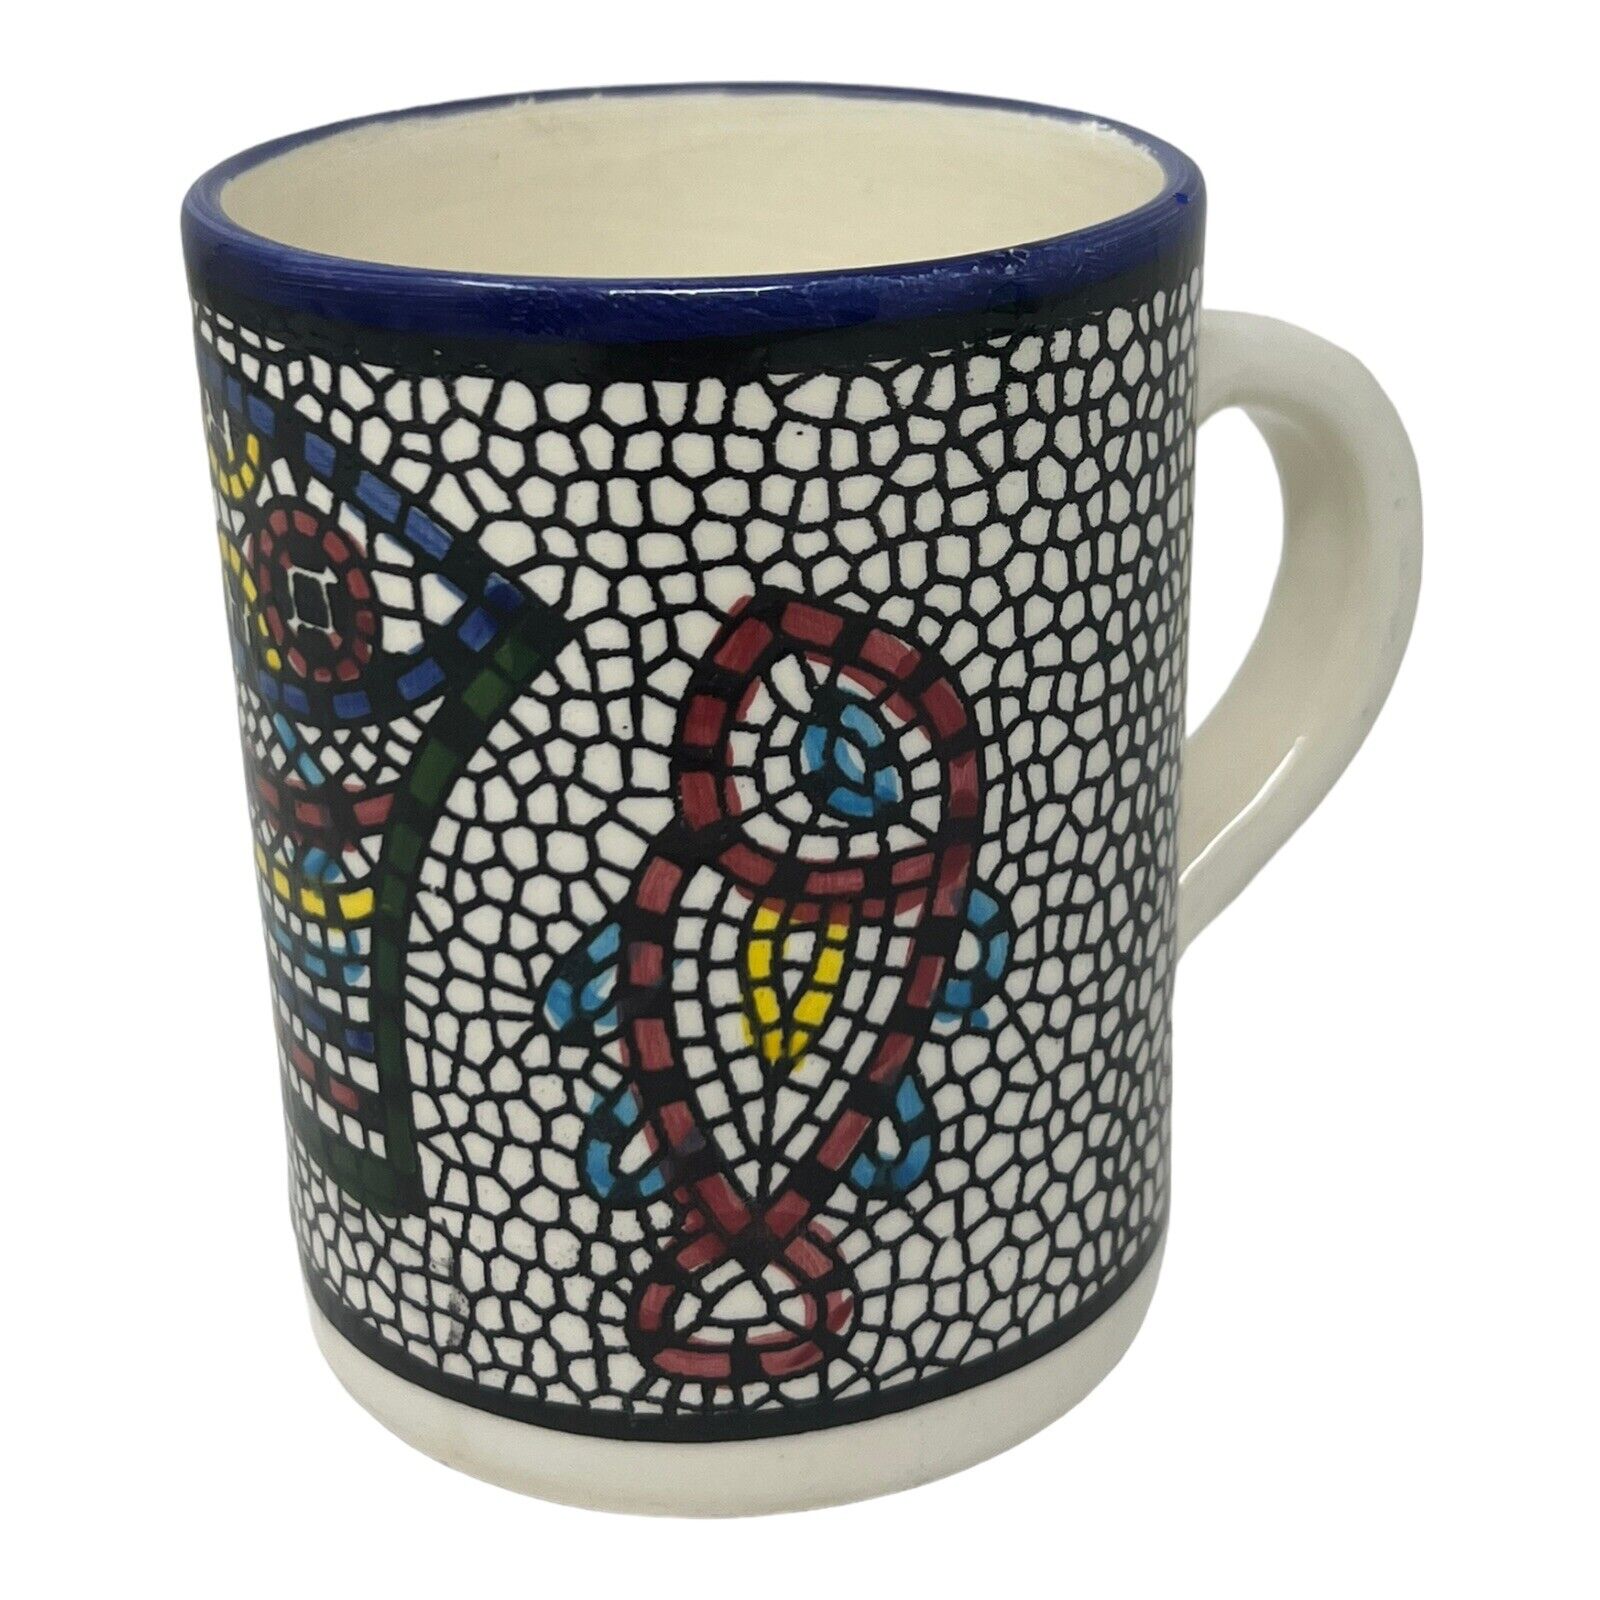 Tabgha or Fish and Bread Multiplication Miracle Armenian Ceramic Cup Mug